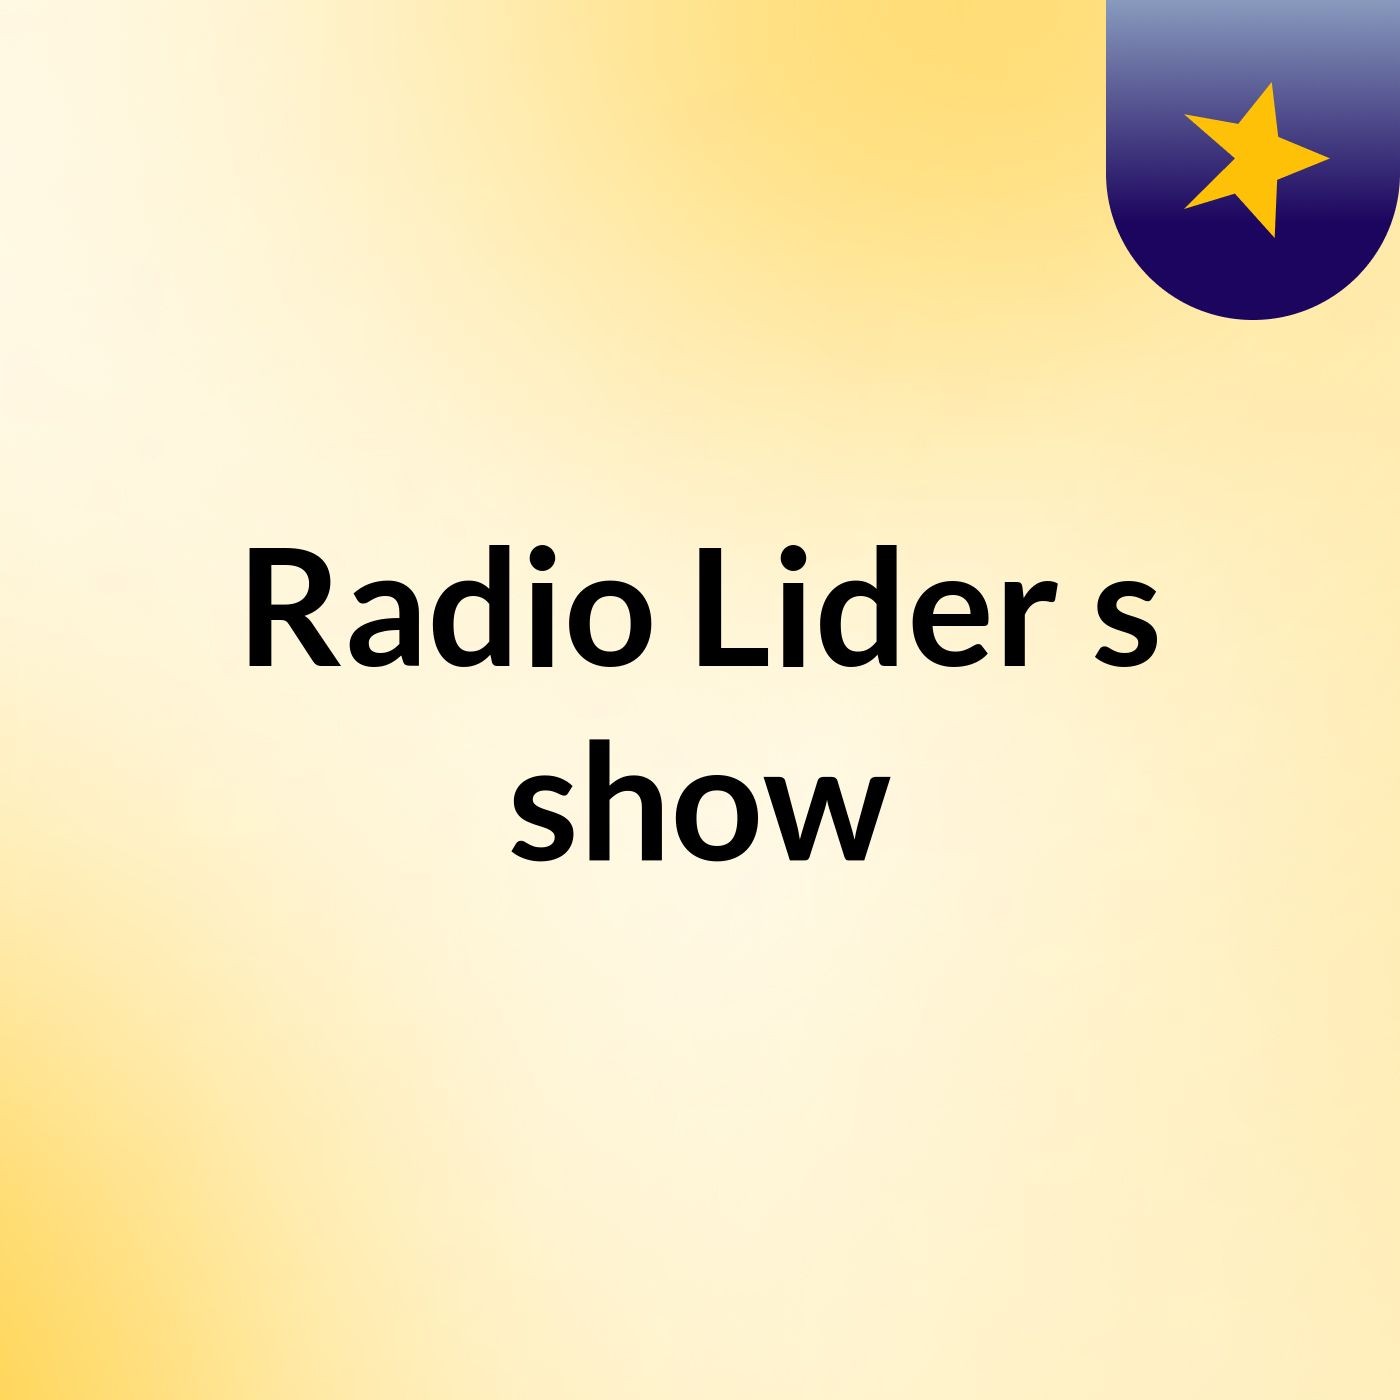 Radio Lider's show